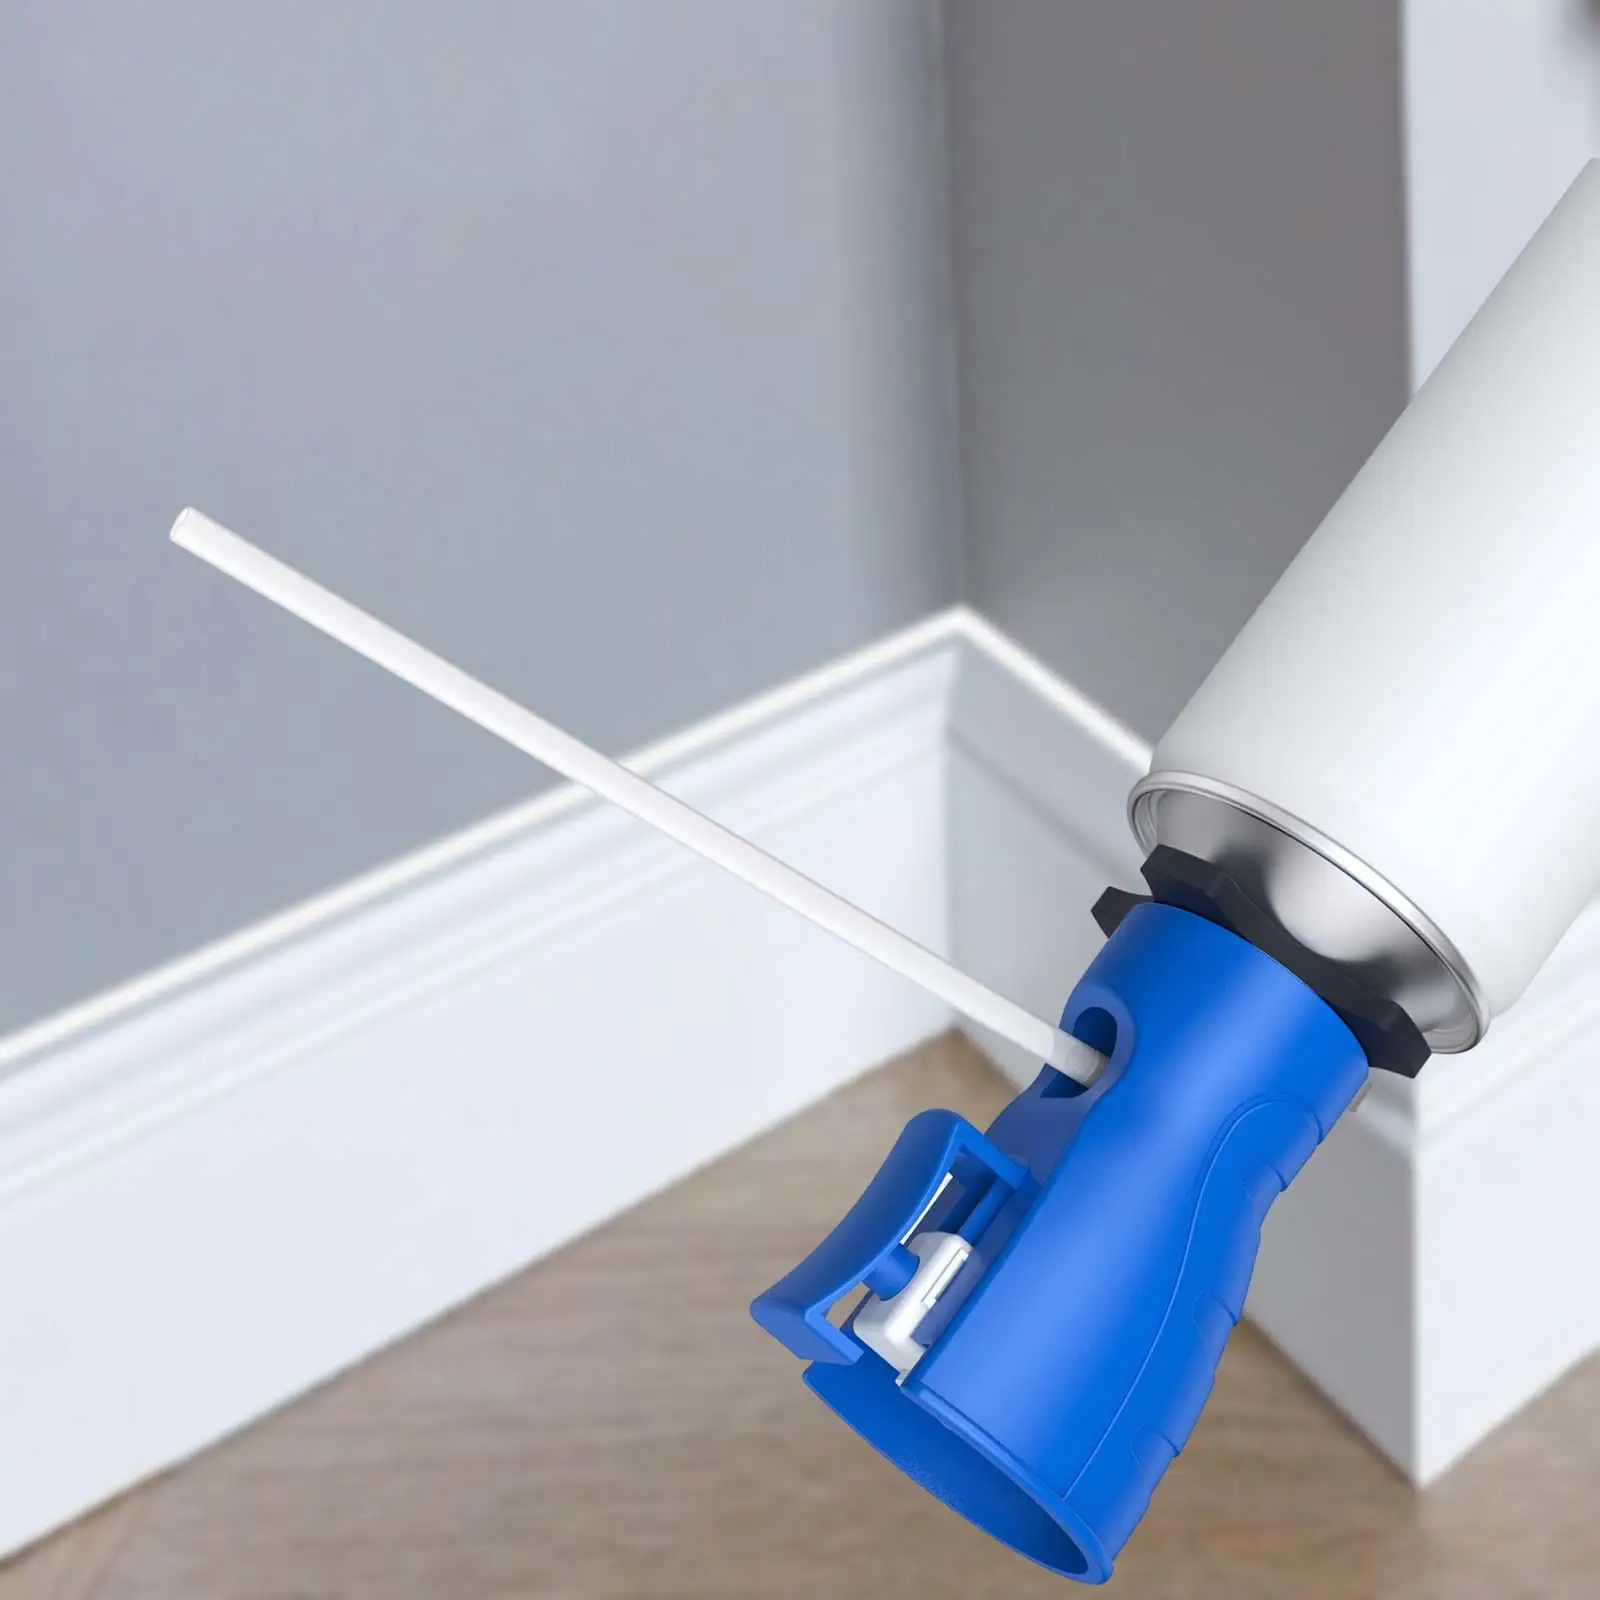 PU Spray Foam Glue Applicator Convenient Versatile Professional Sealant Tool for Construction Filling Sealing Windows Gap Crafts